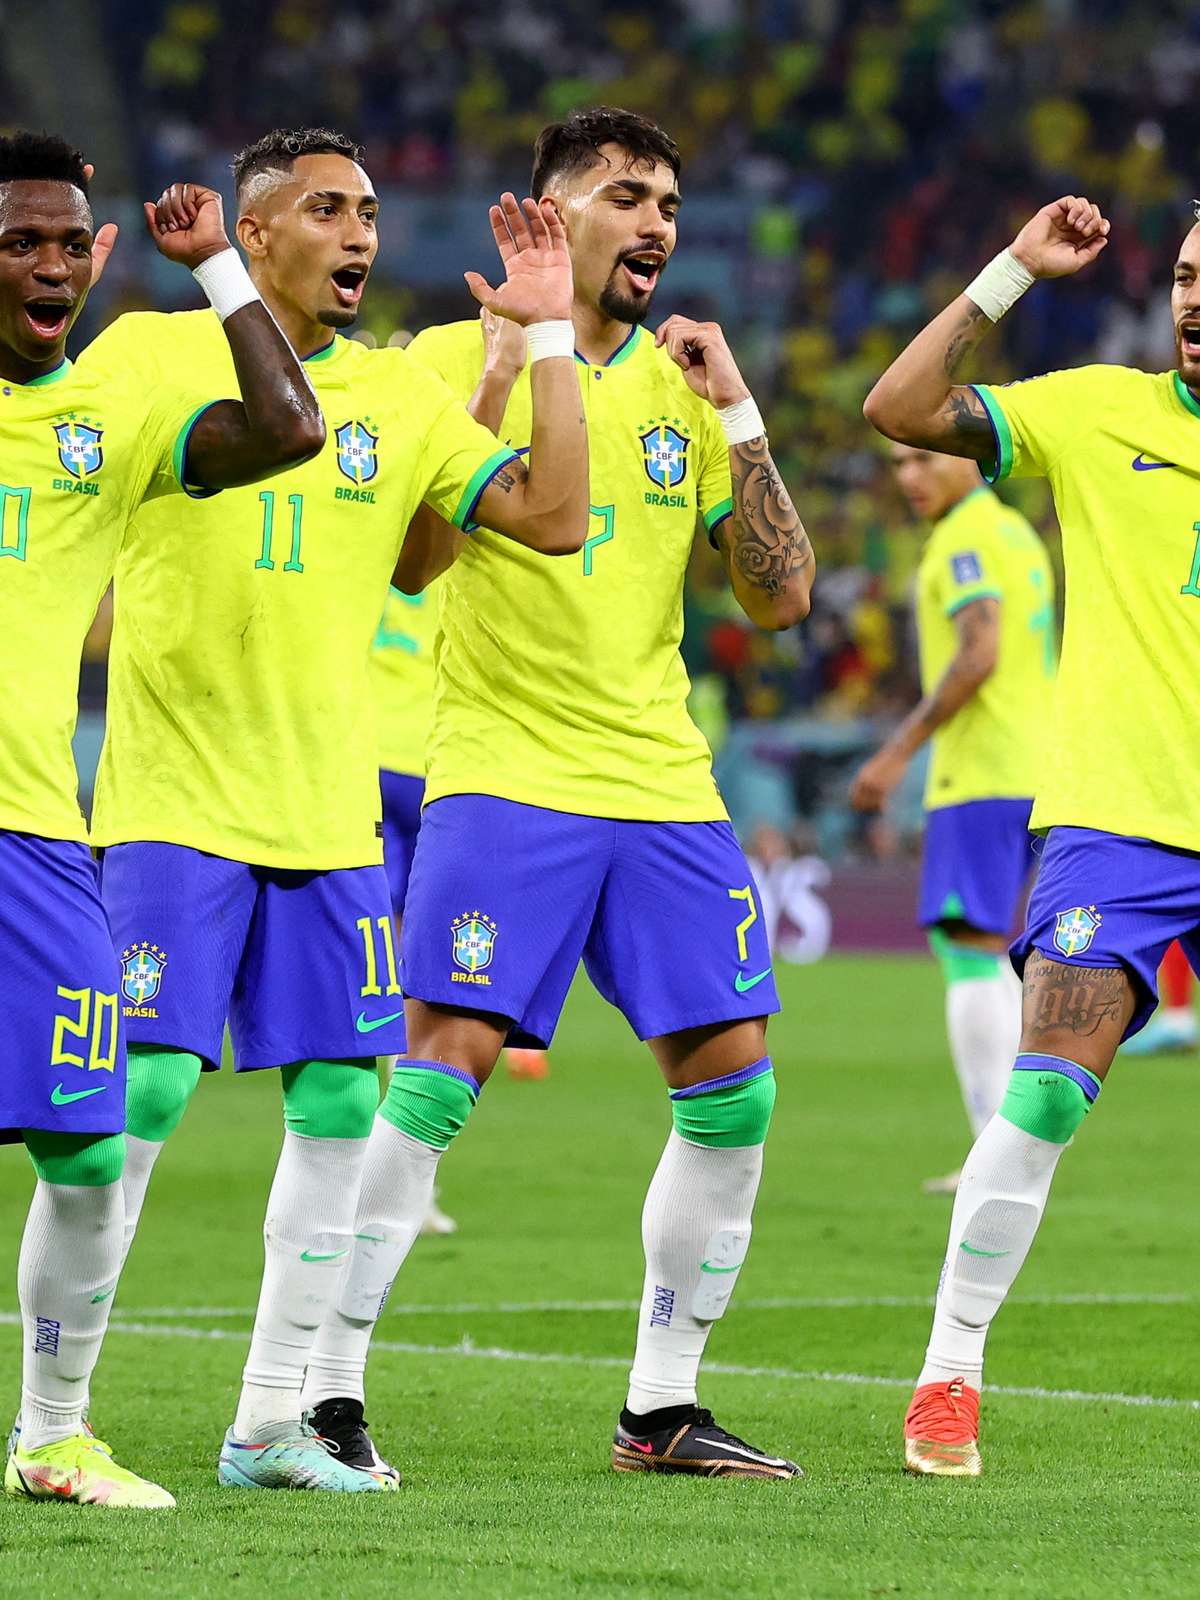 Brasil 4-1 Coreia do Sul (5 de dez, 2022) Placar Final - ESPN (BR)